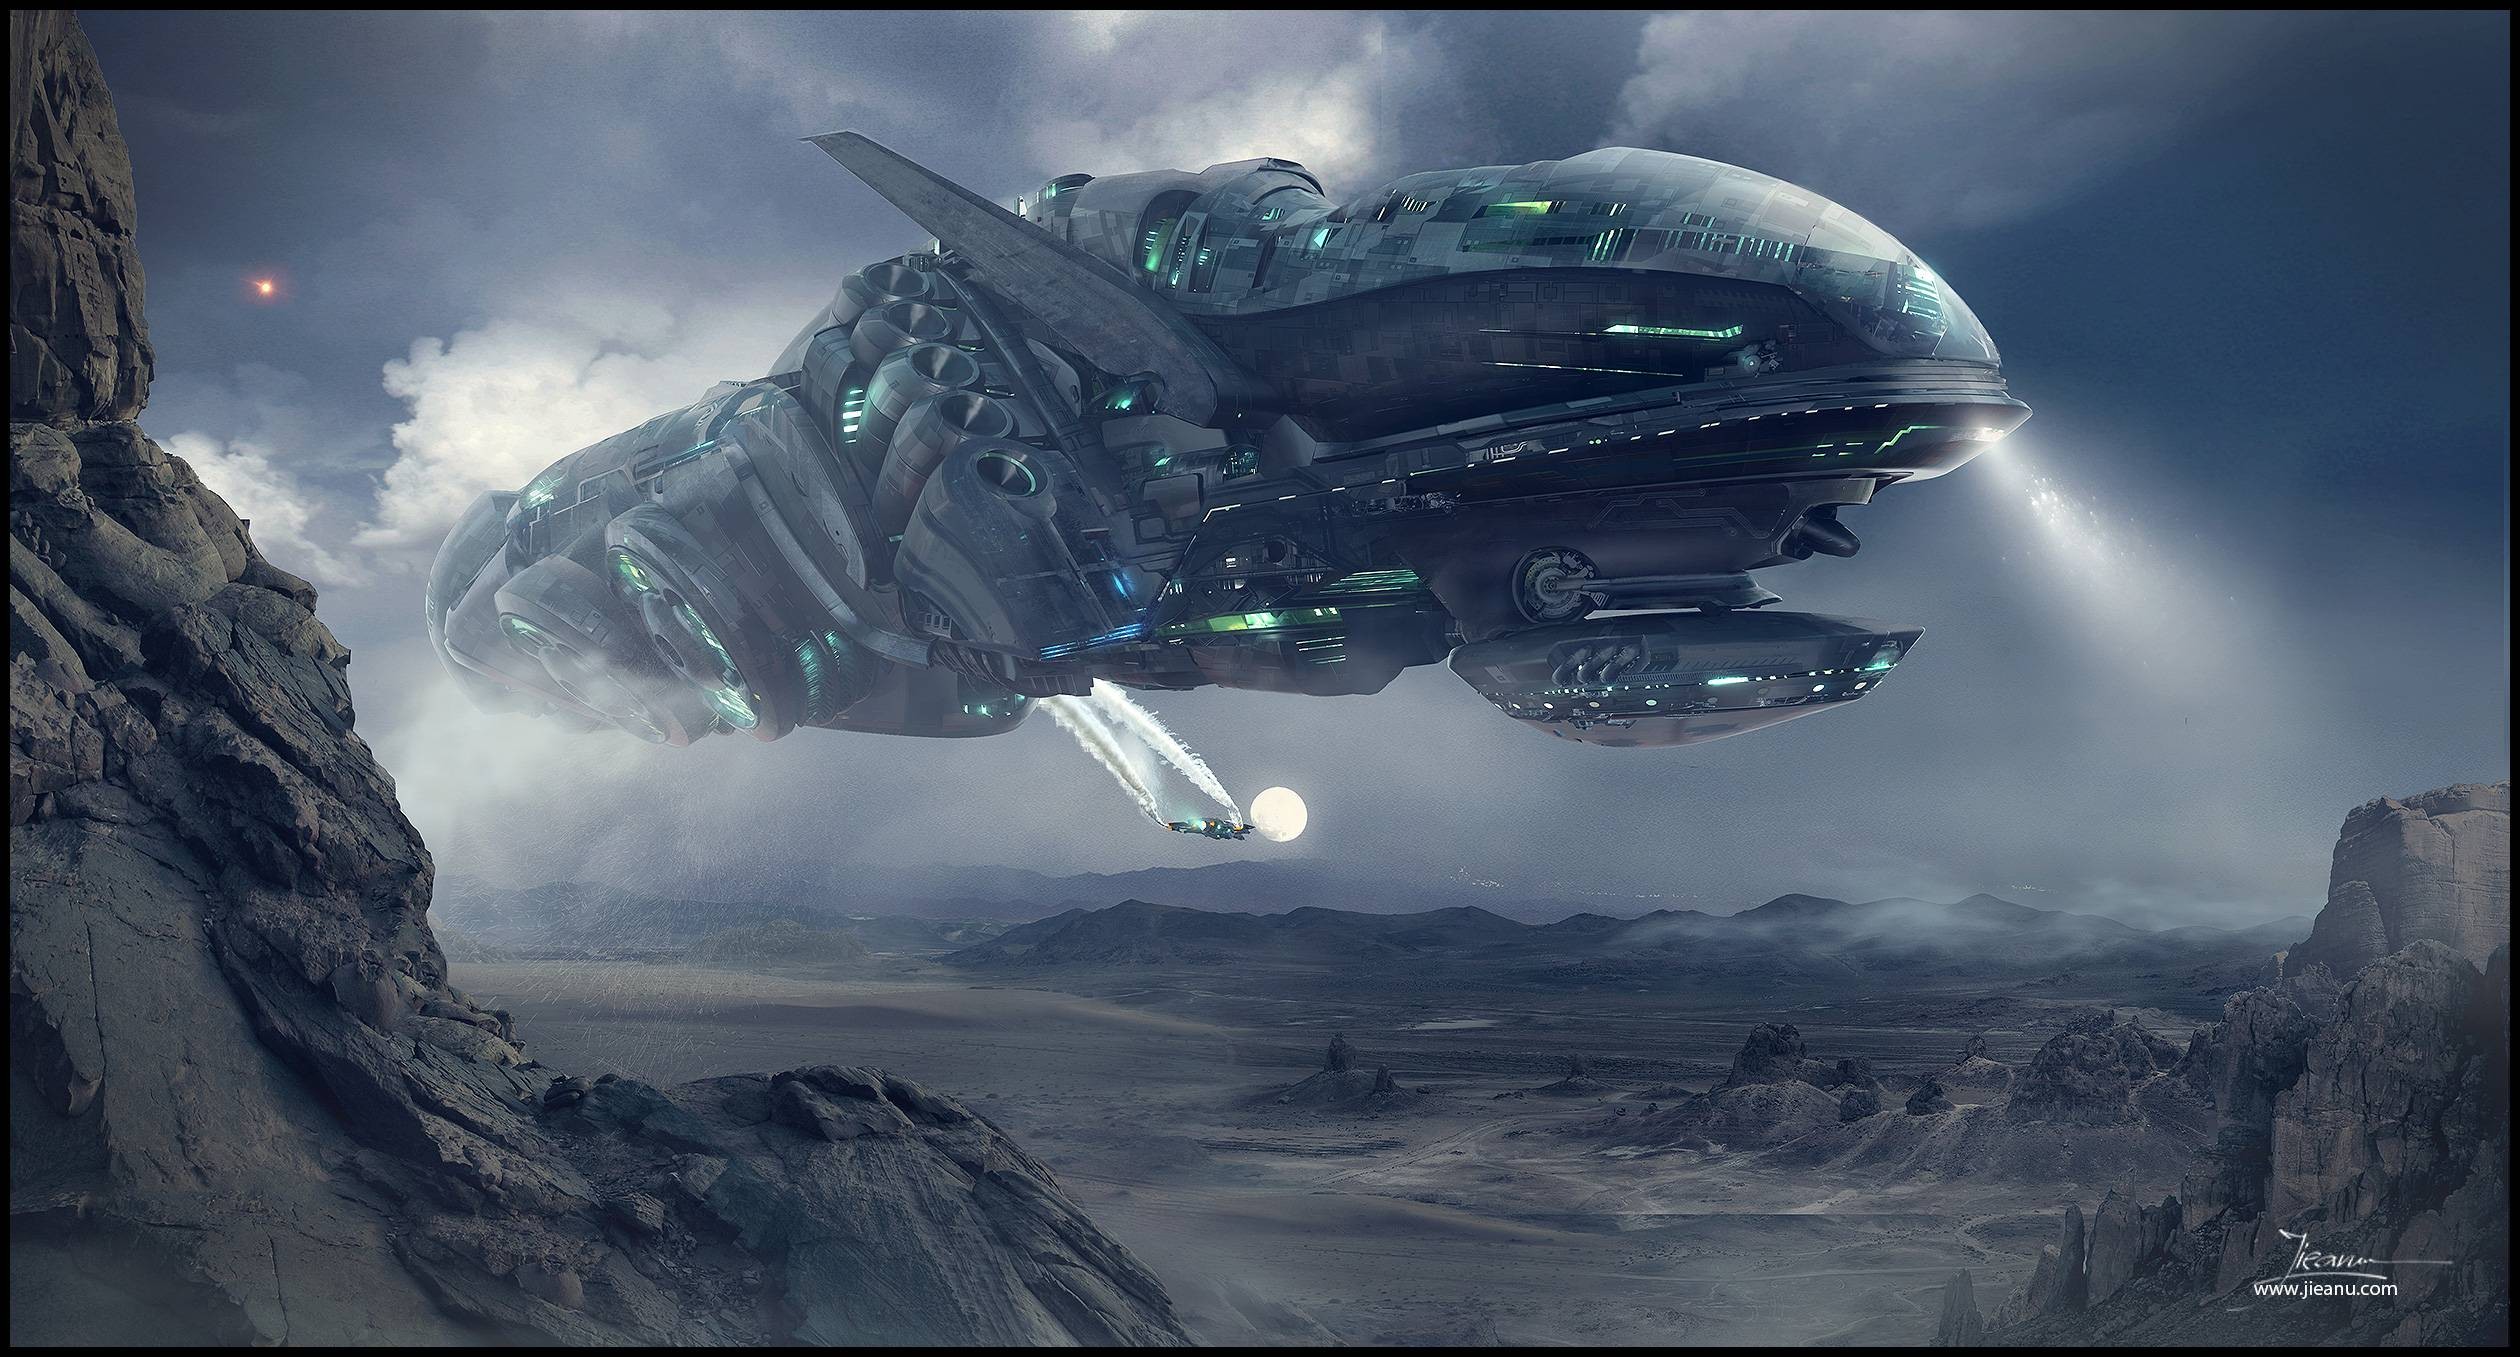 General 2520x1357 spaceship vehicle planet science fiction digital art Dragos Jieanu